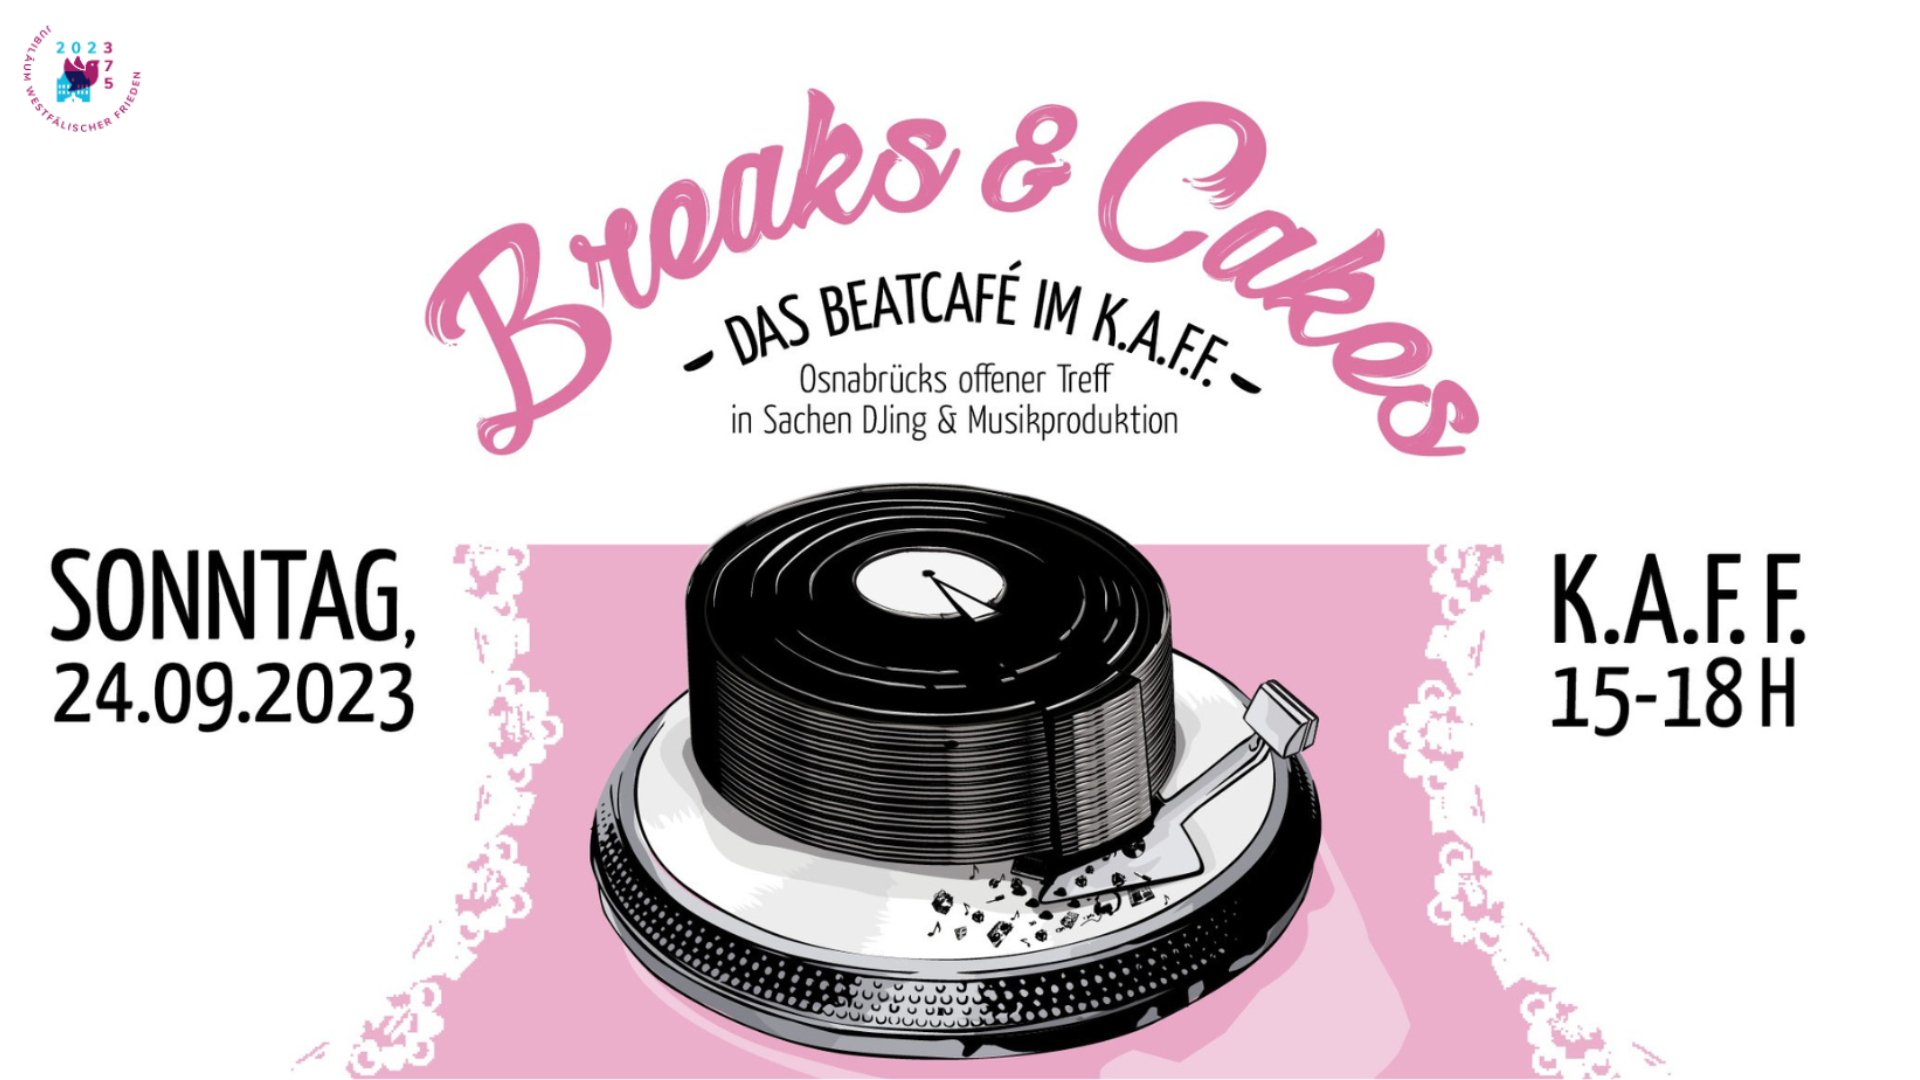 Breaks and Cakes Beat Café im KAFF